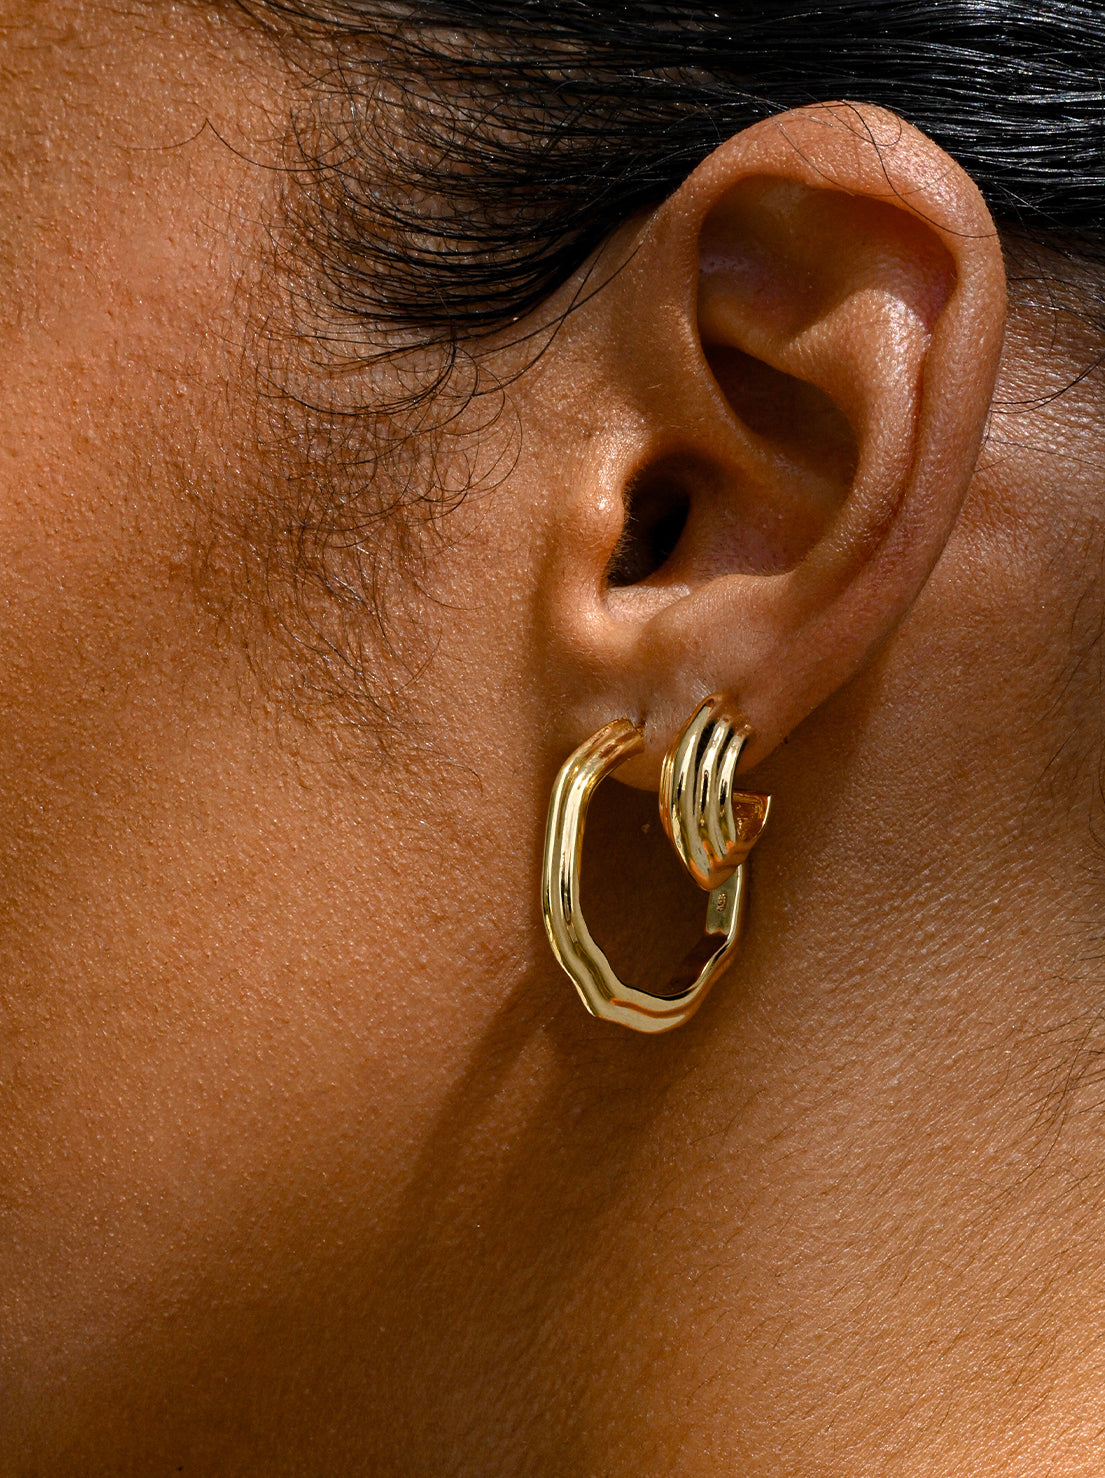 Linda Tahija - Contour Hoop Earrings - Gold Plated